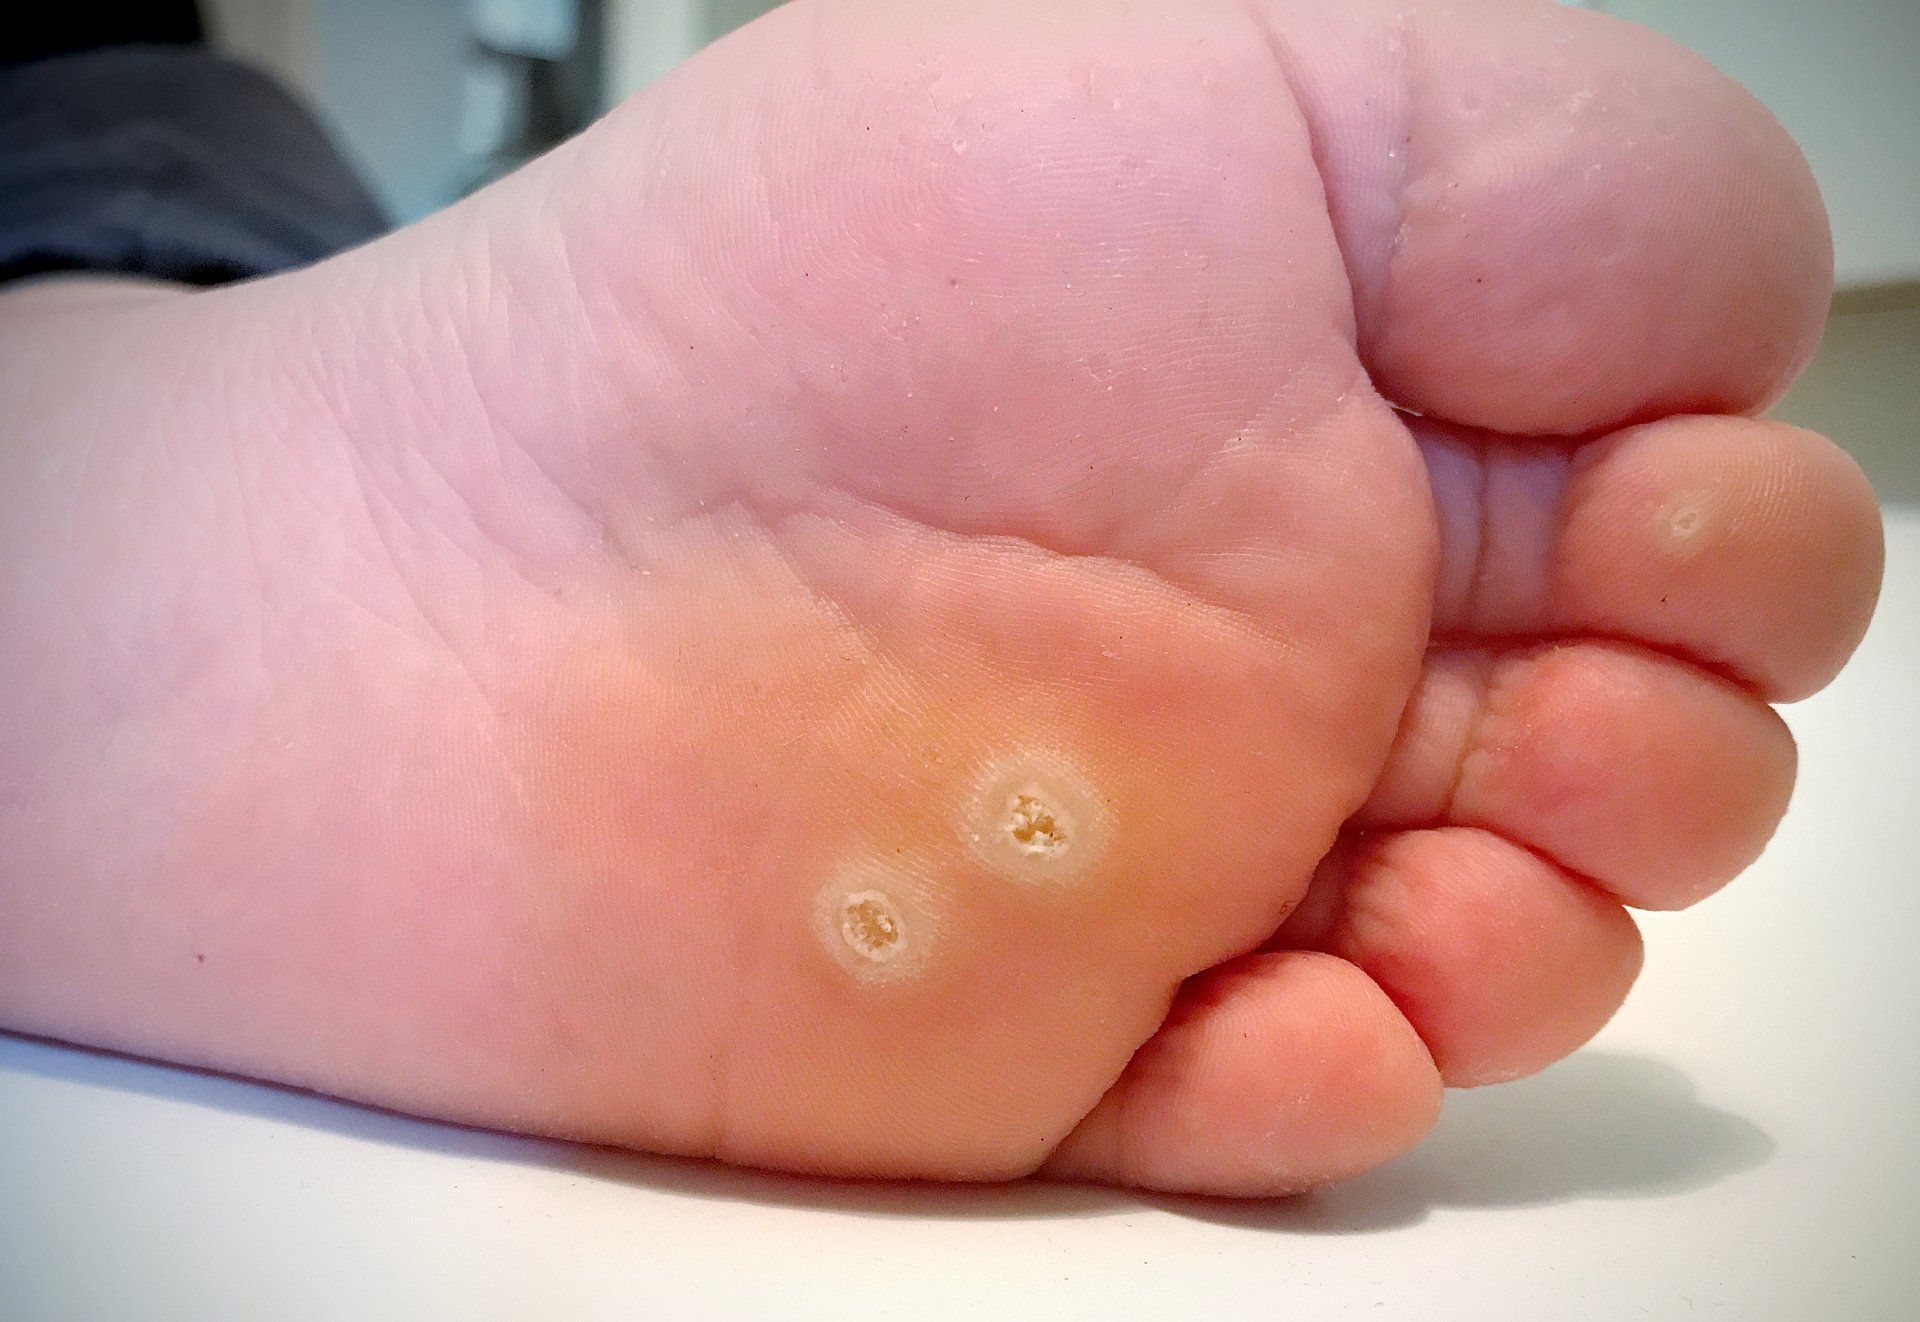 Image of Plantar Warts or Warts on Bottom of Foot